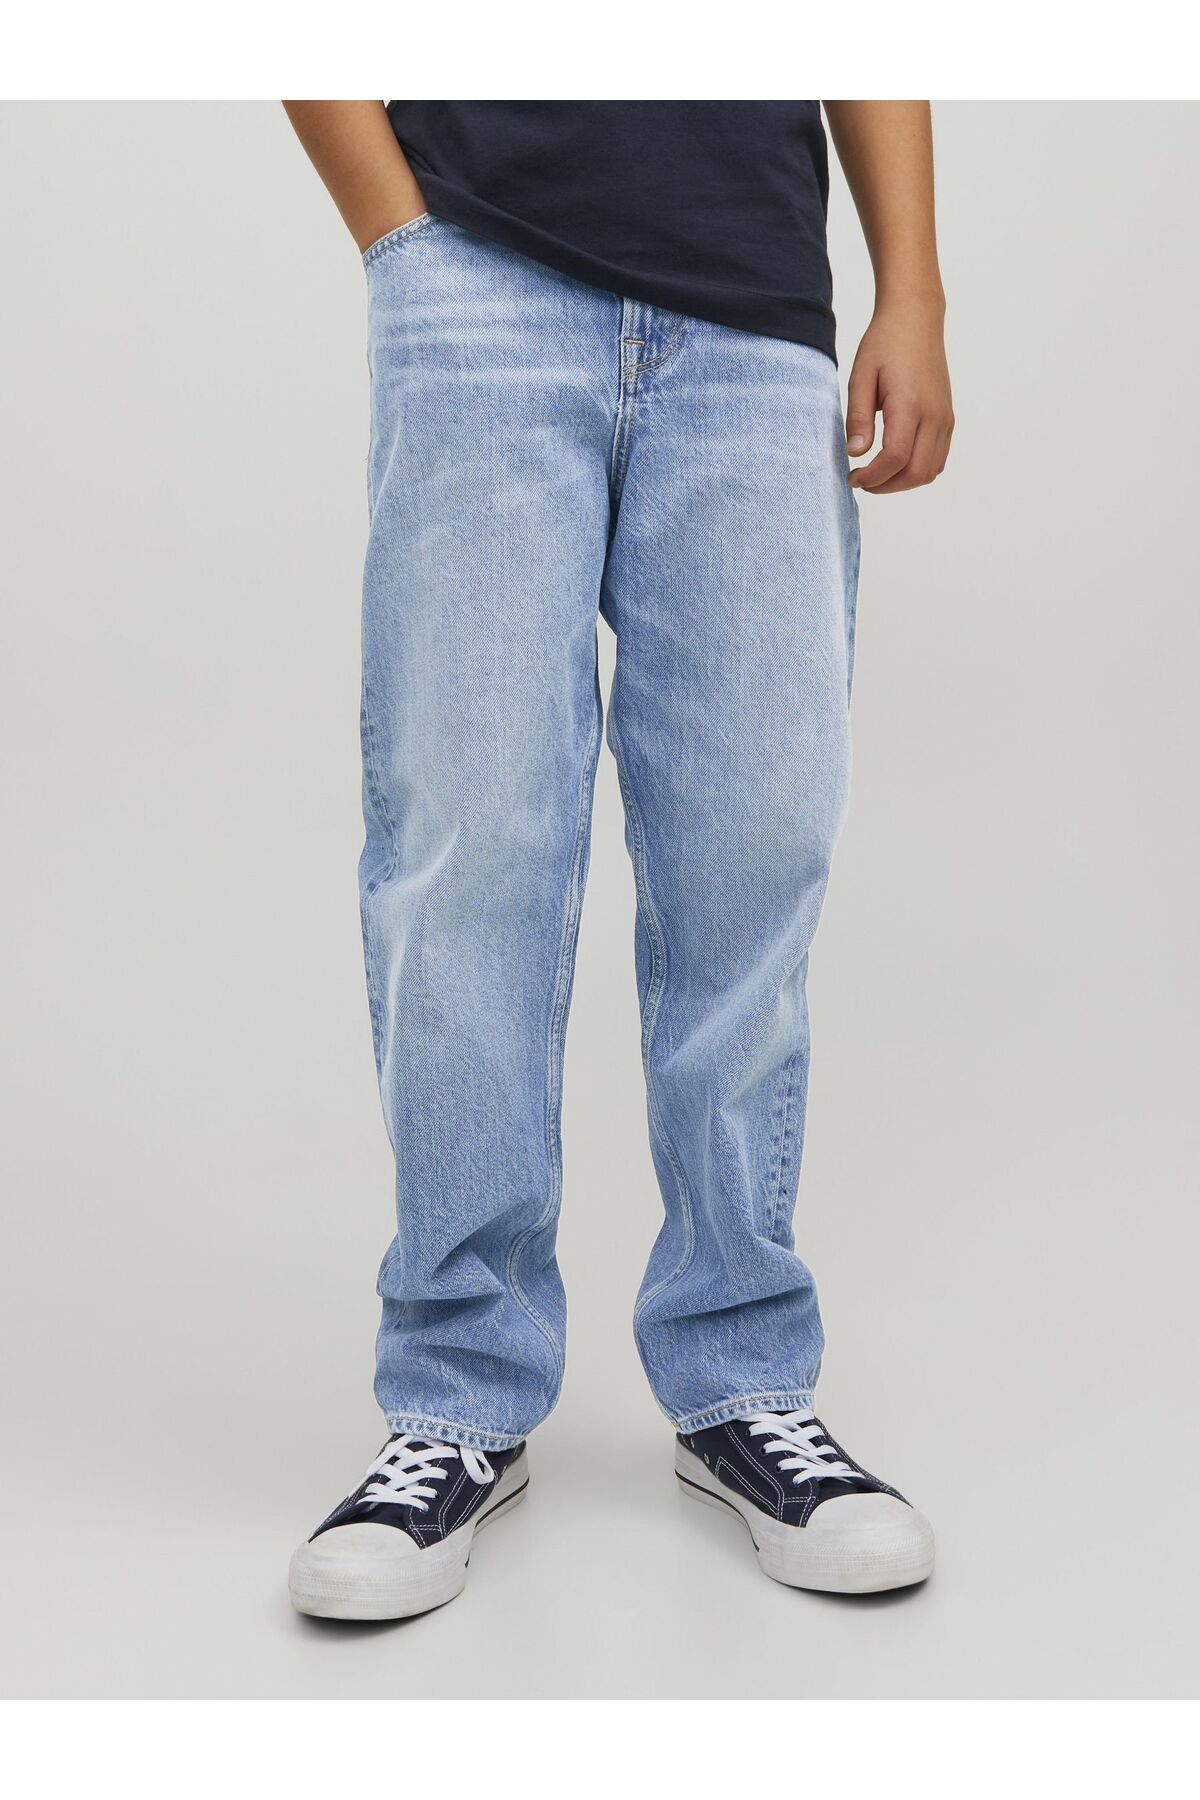 Jack & Jones Junior Jeans - Blau - Straight - Trendyol